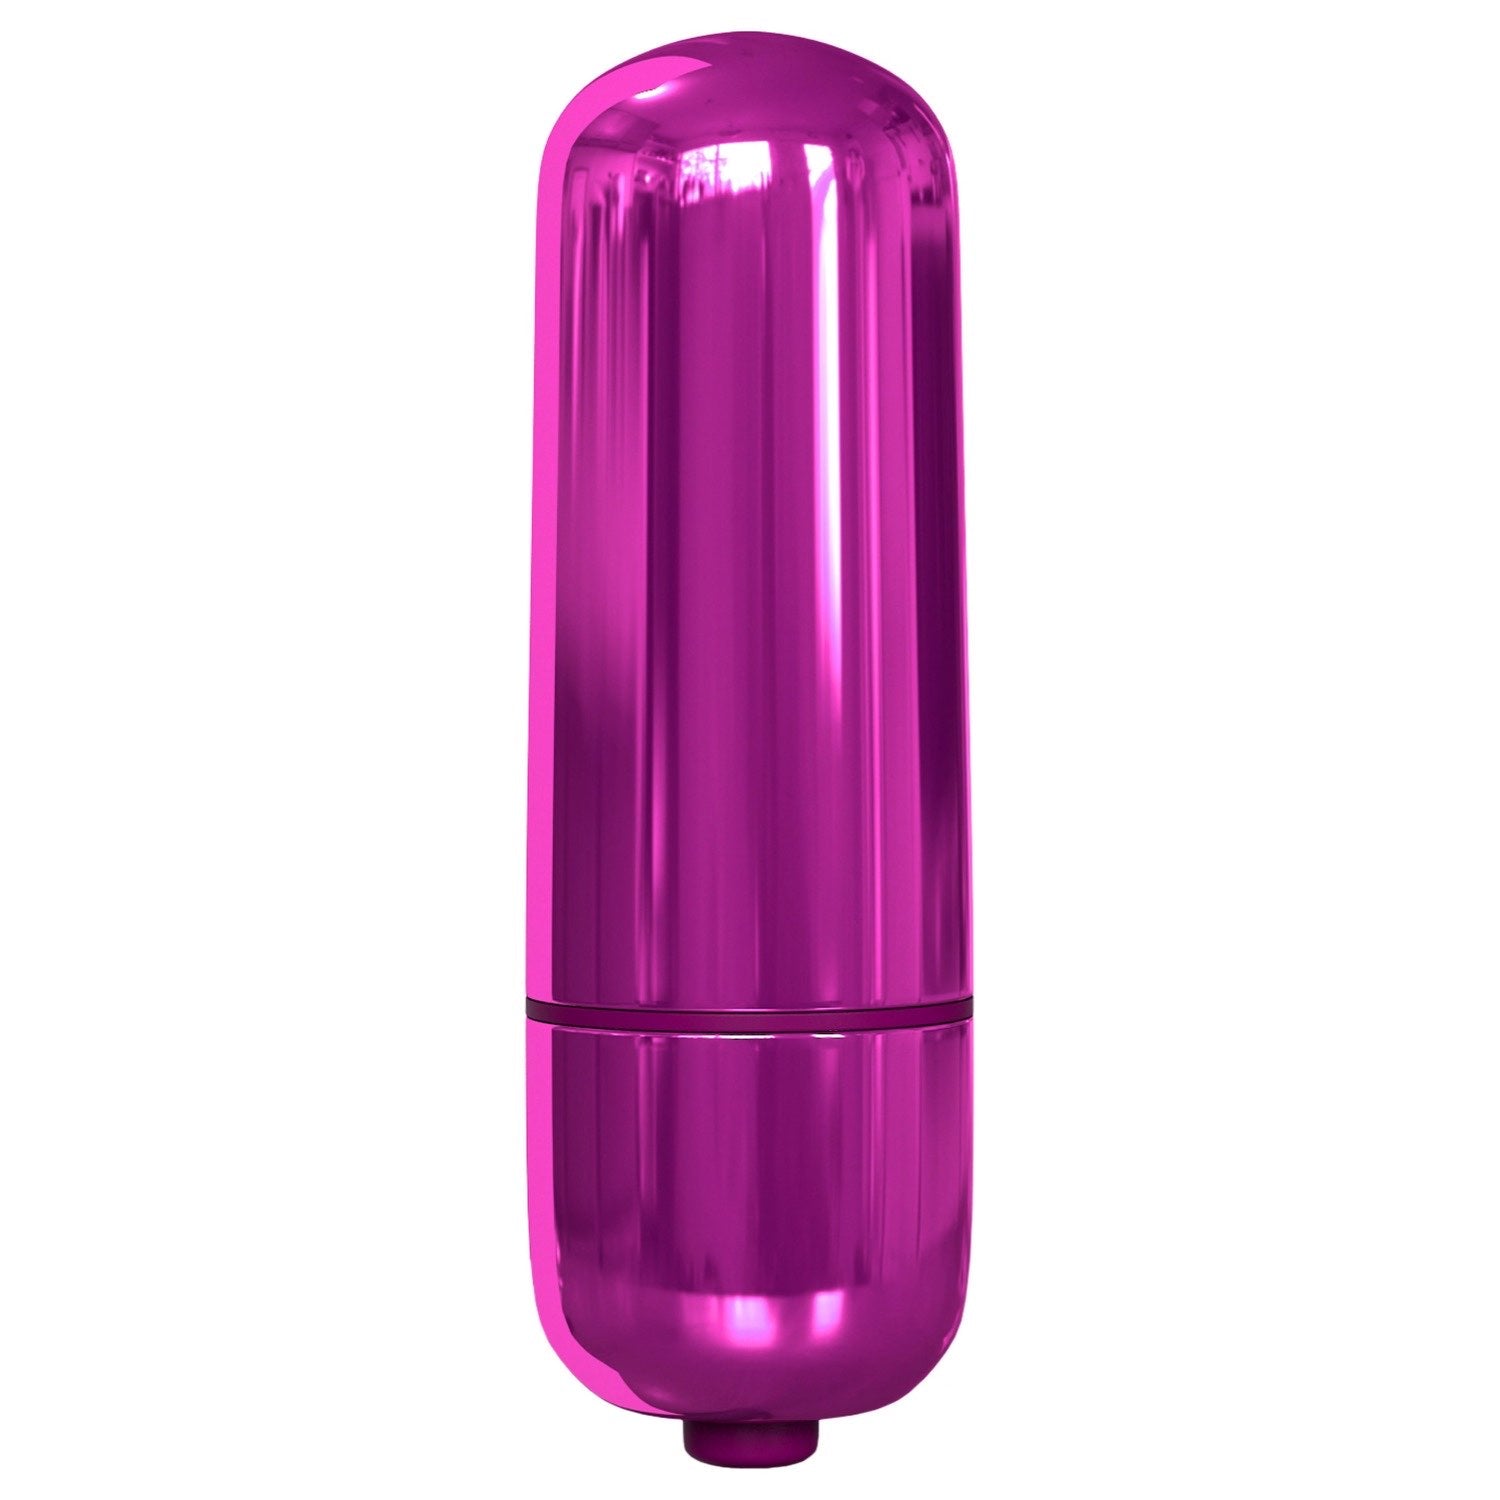 Classix Pocket Bullet - Metallic Pink 5.6 cm Bullet by Pipedream